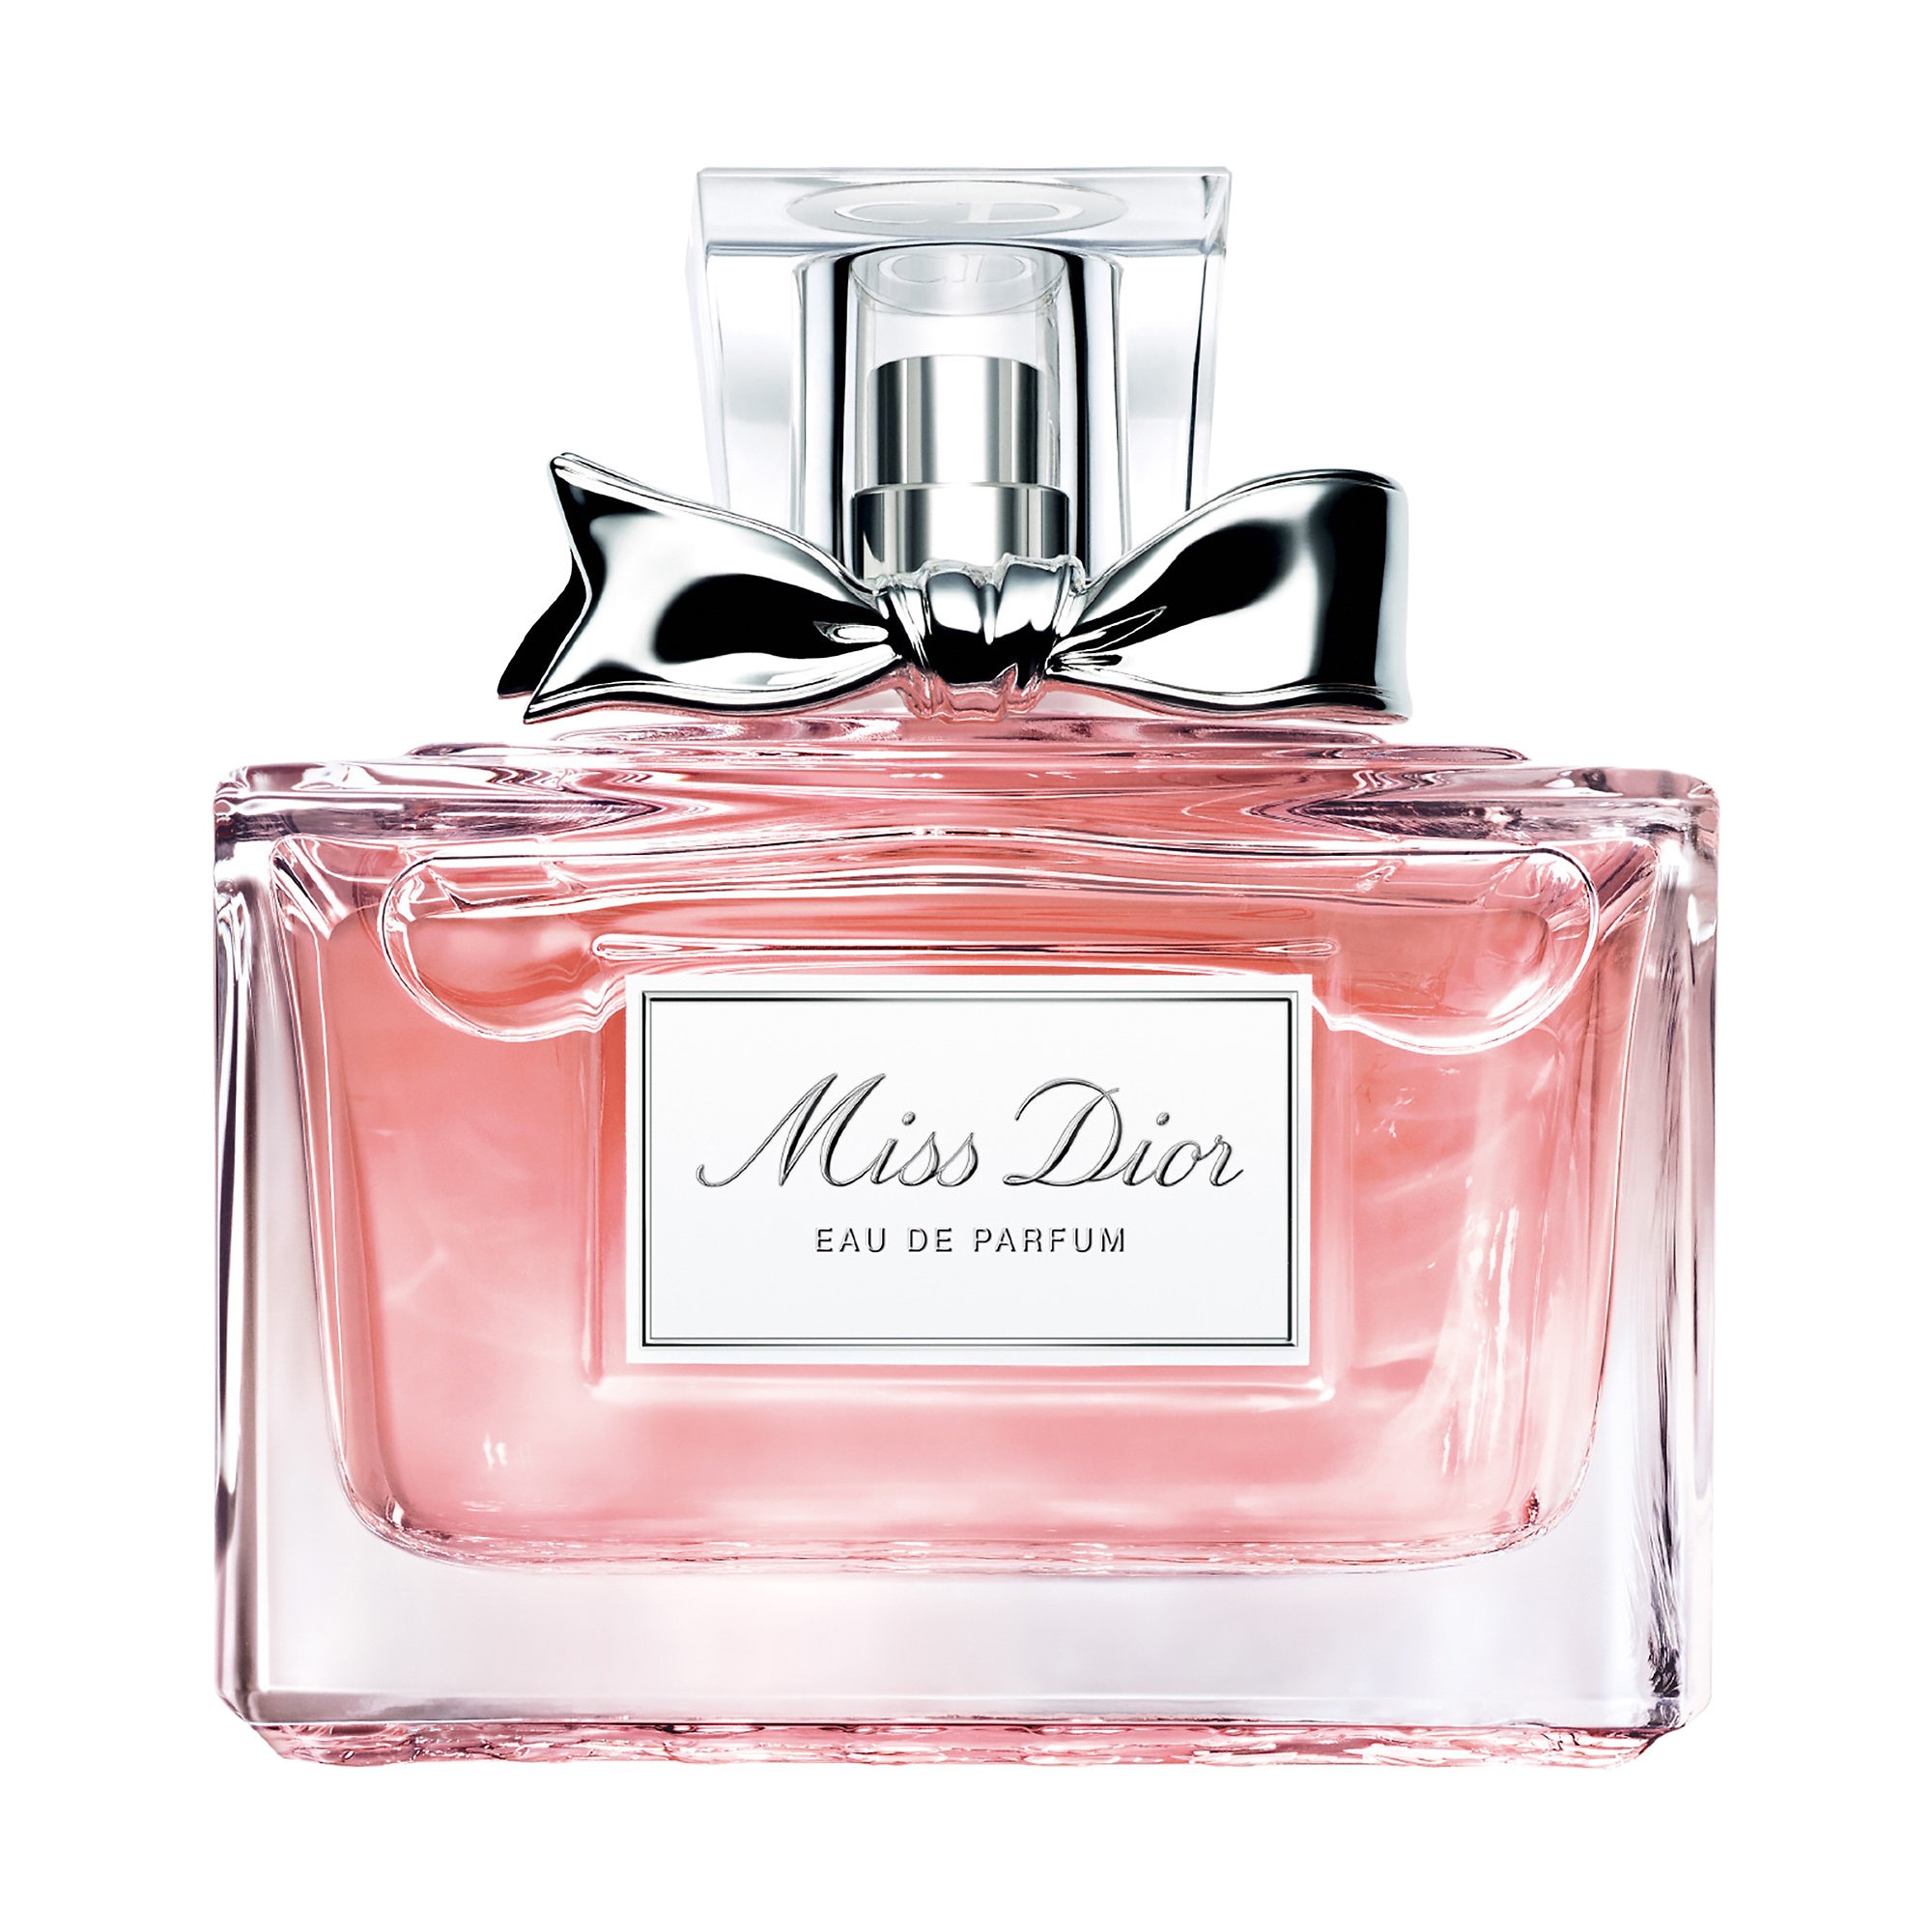 Dior Miss Dior Eau de Parfum 1.7oz